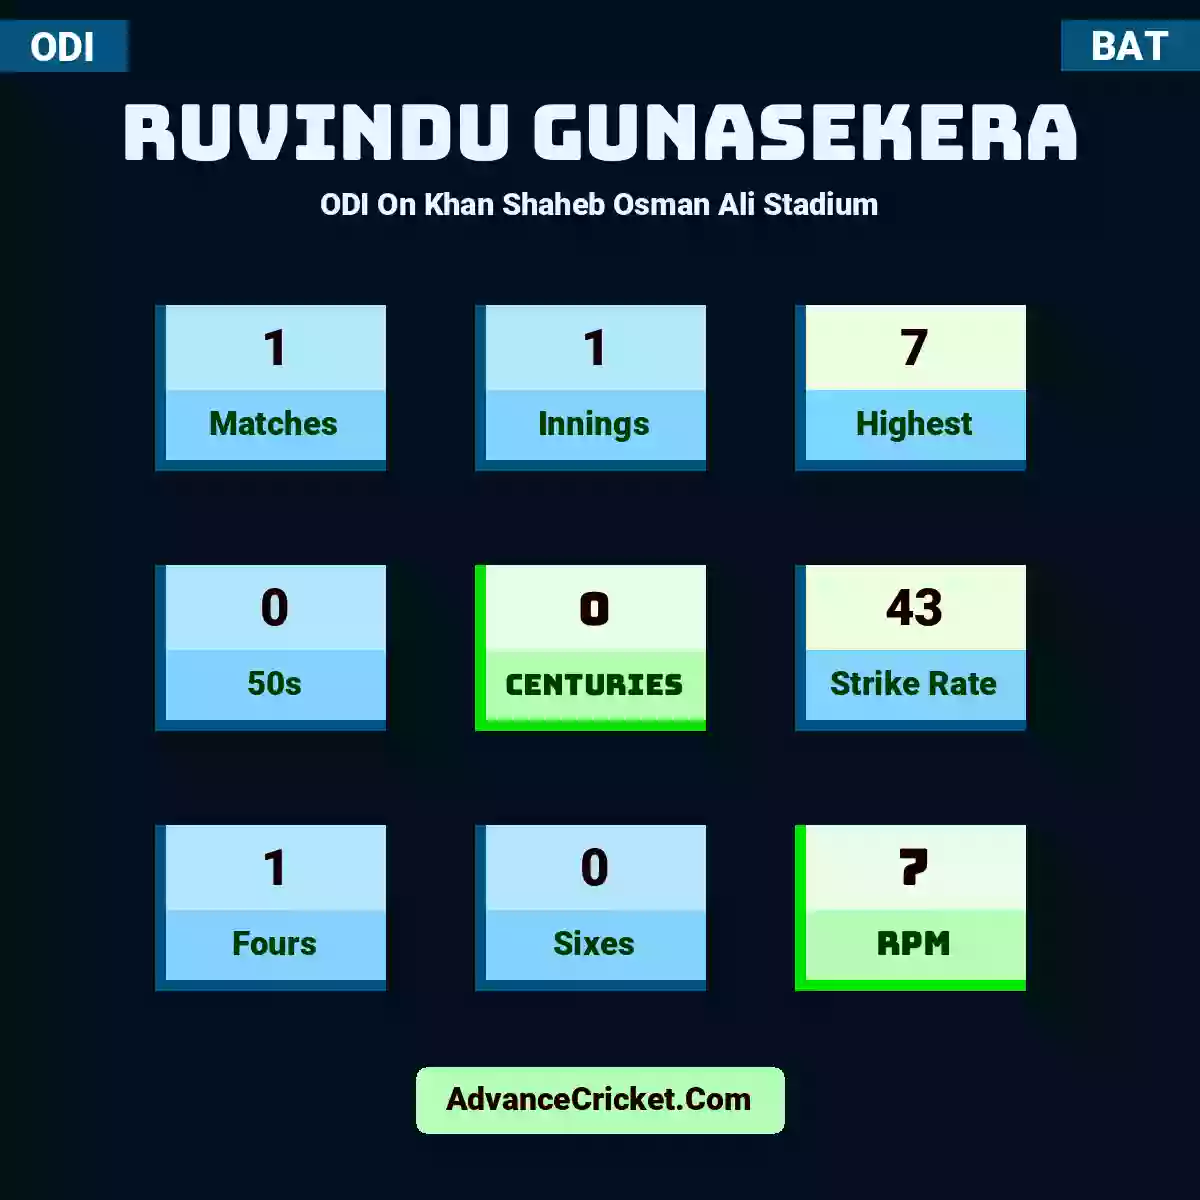 Ruvindu Gunasekera ODI  On Khan Shaheb Osman Ali Stadium, Ruvindu Gunasekera played 1 matches, scored 7 runs as highest, 0 half-centuries, and 0 centuries, with a strike rate of 43. R.Gunasekera hit 1 fours and 0 sixes, with an RPM of 7.